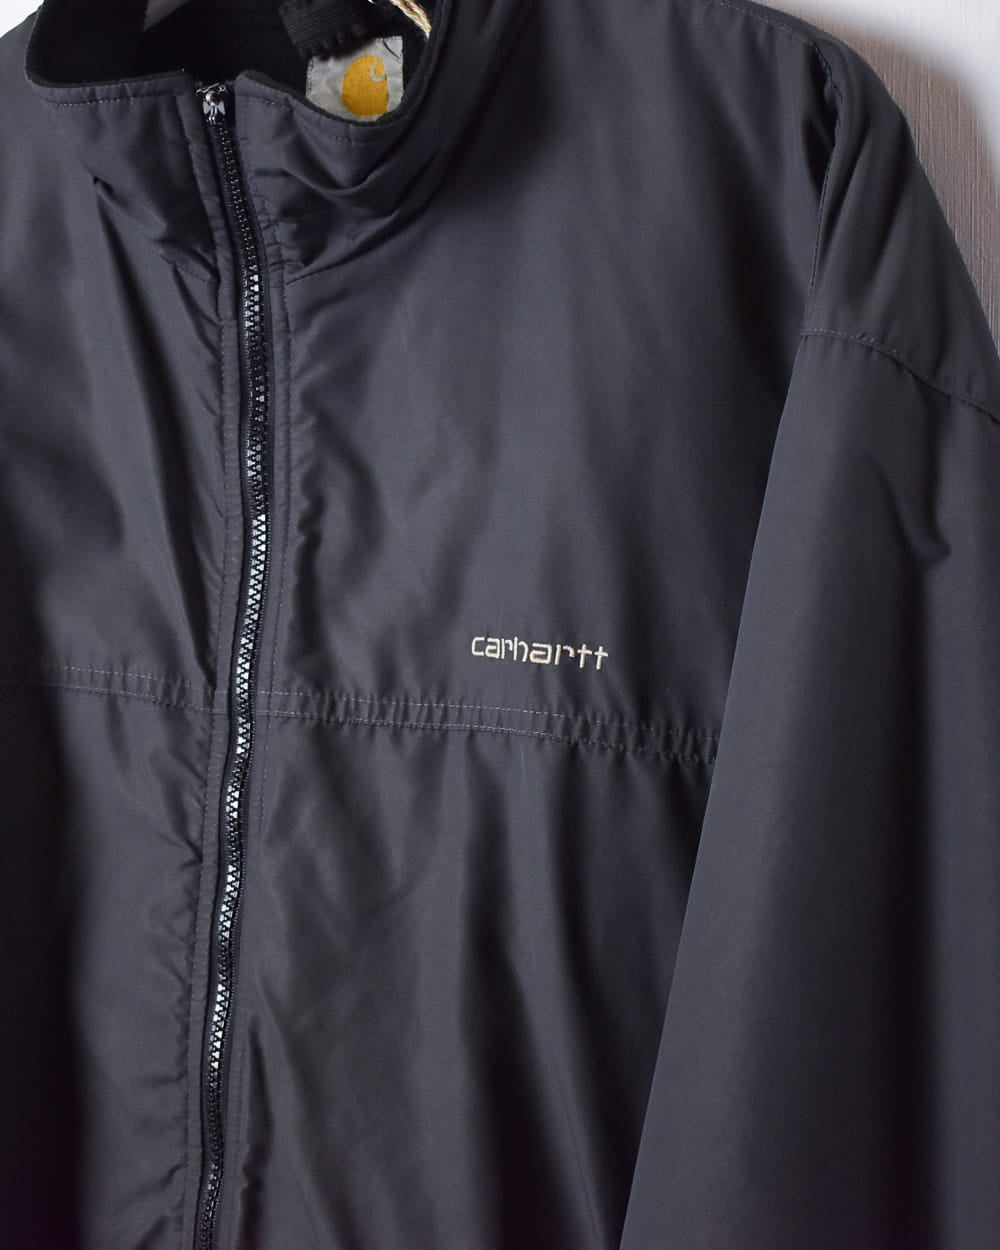 Grey Carhartt Fleece Lined Jacket - Large